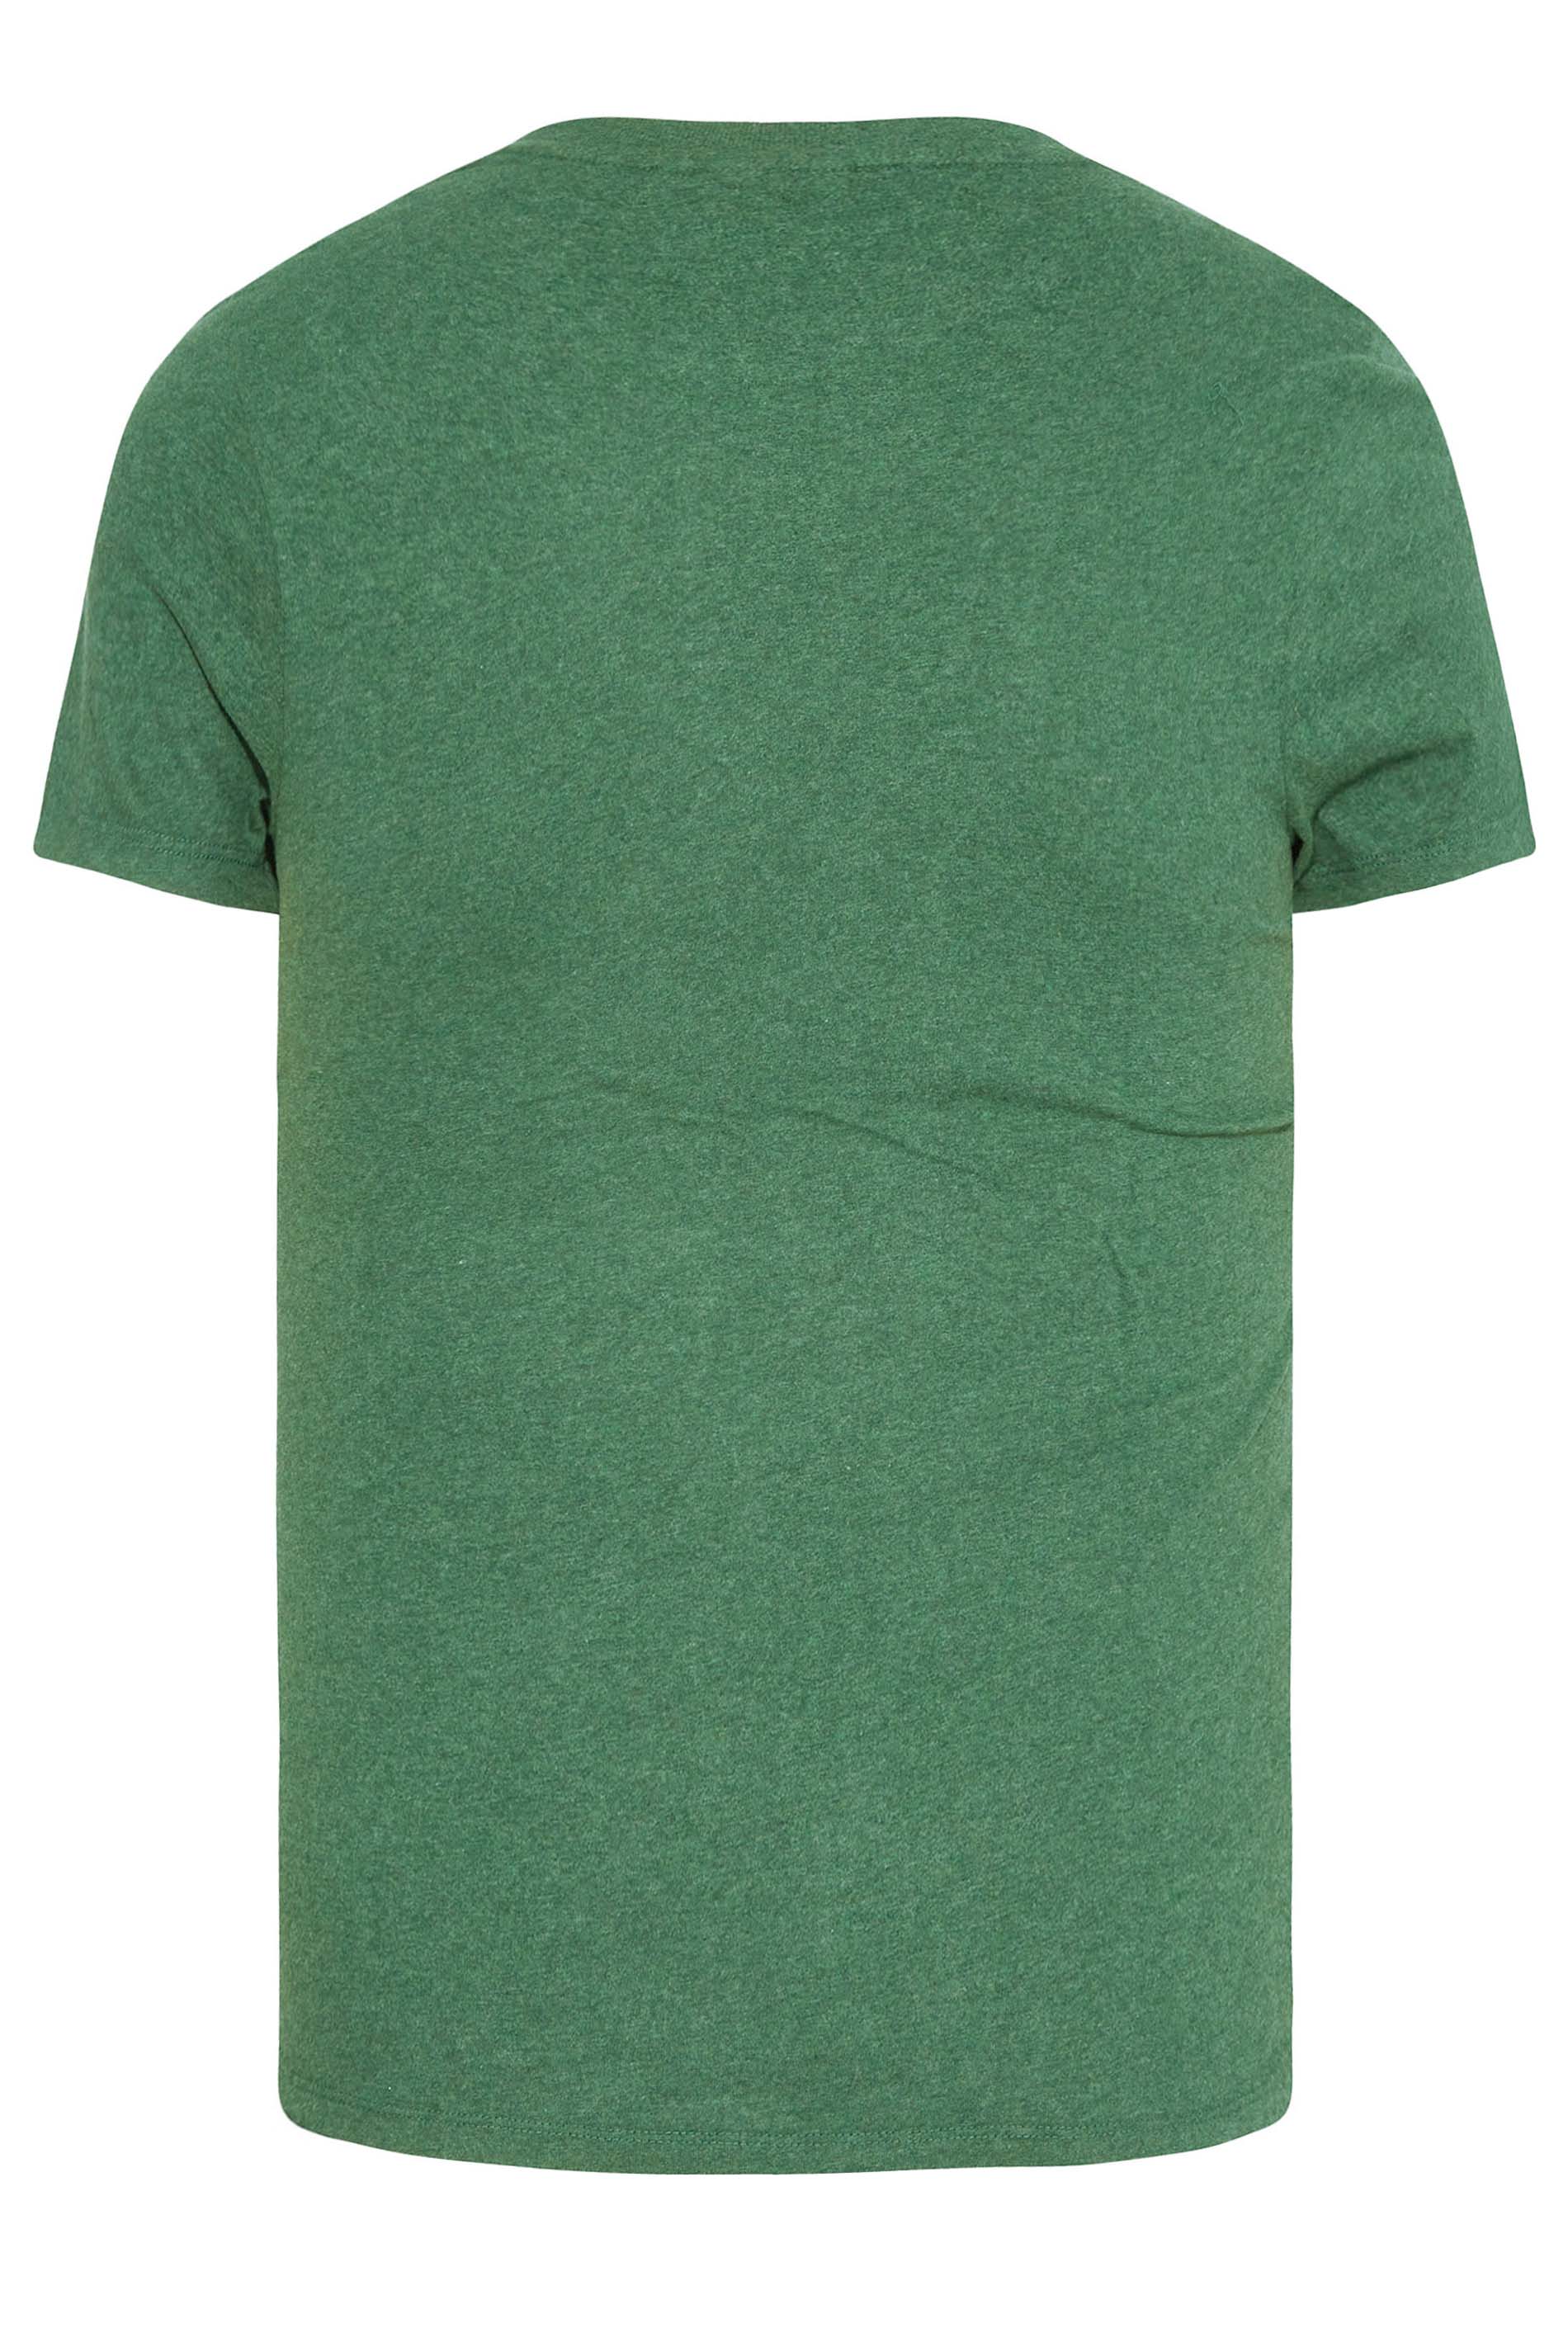 SUPERDRY Green Vintage T-Shirt | BadRhino 2